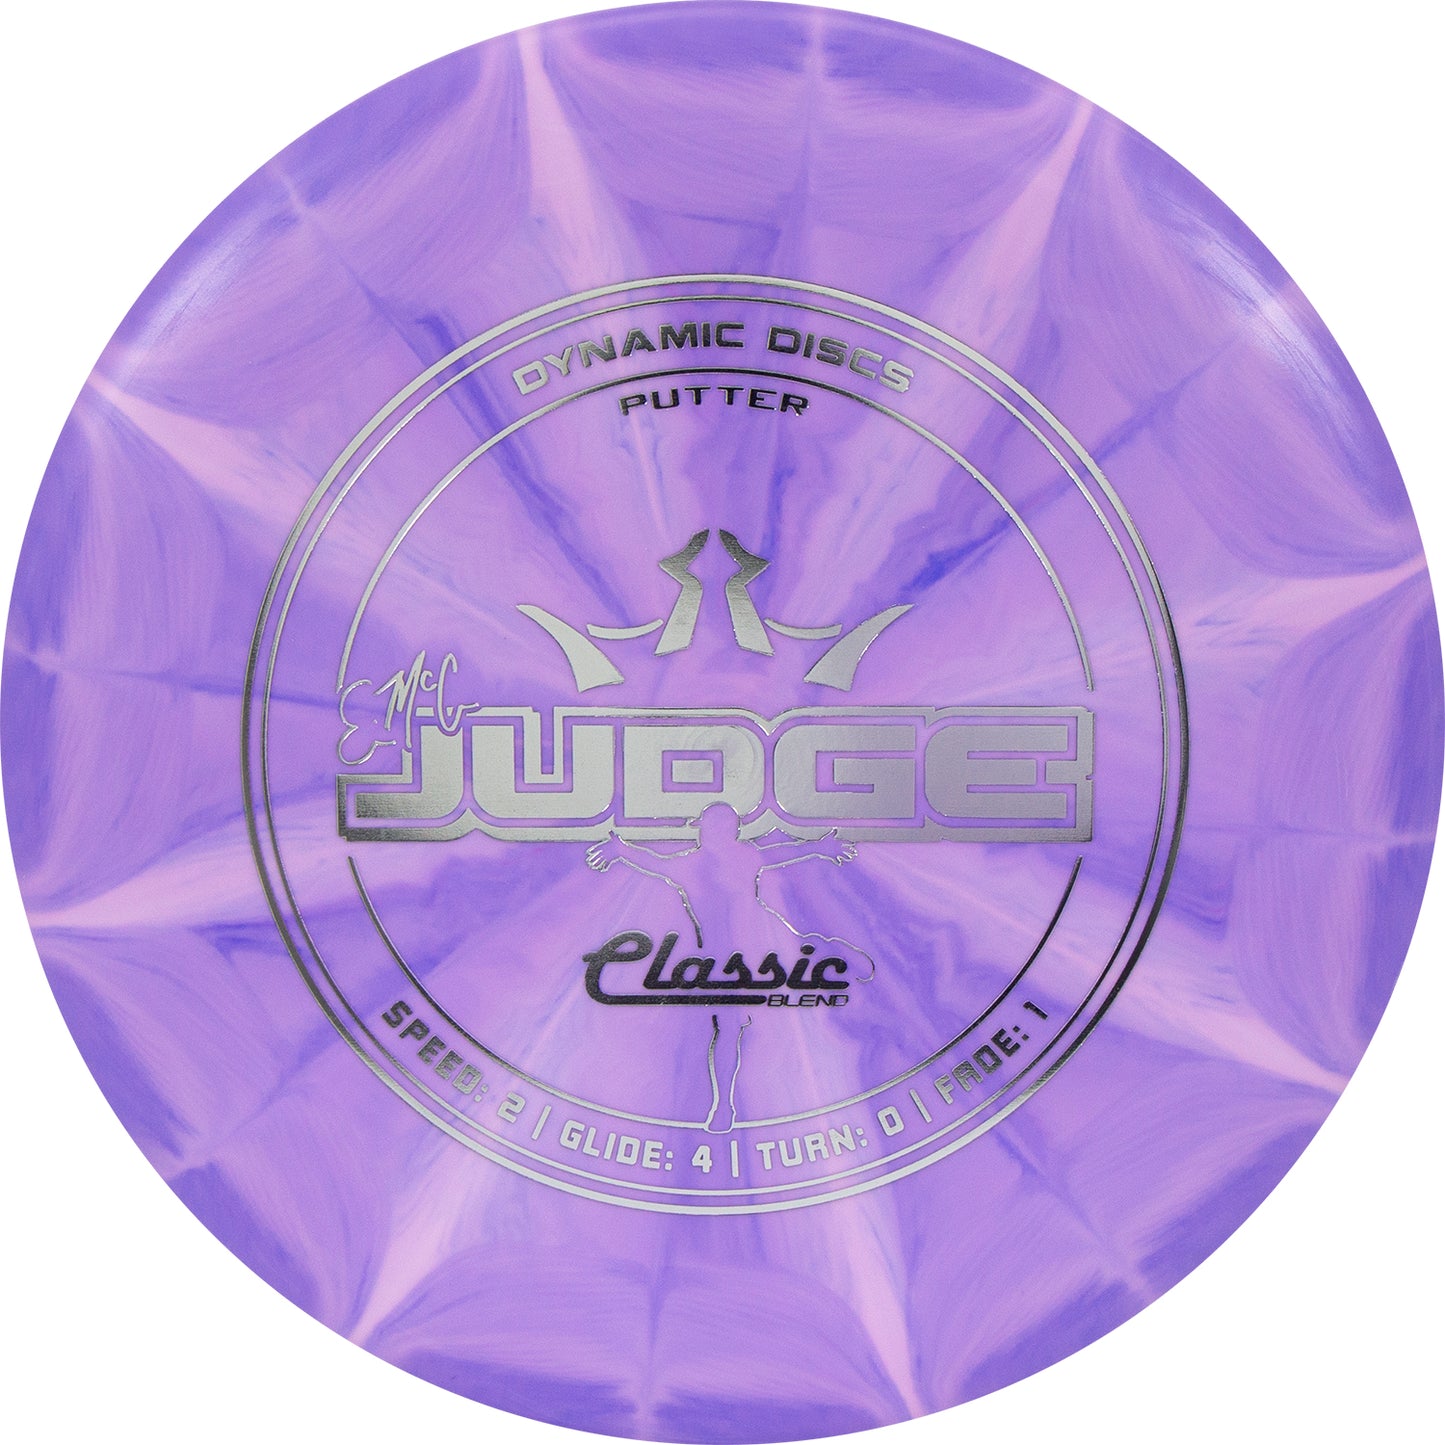 Dynamic Discs Classic Blend Burst EMAC Judge